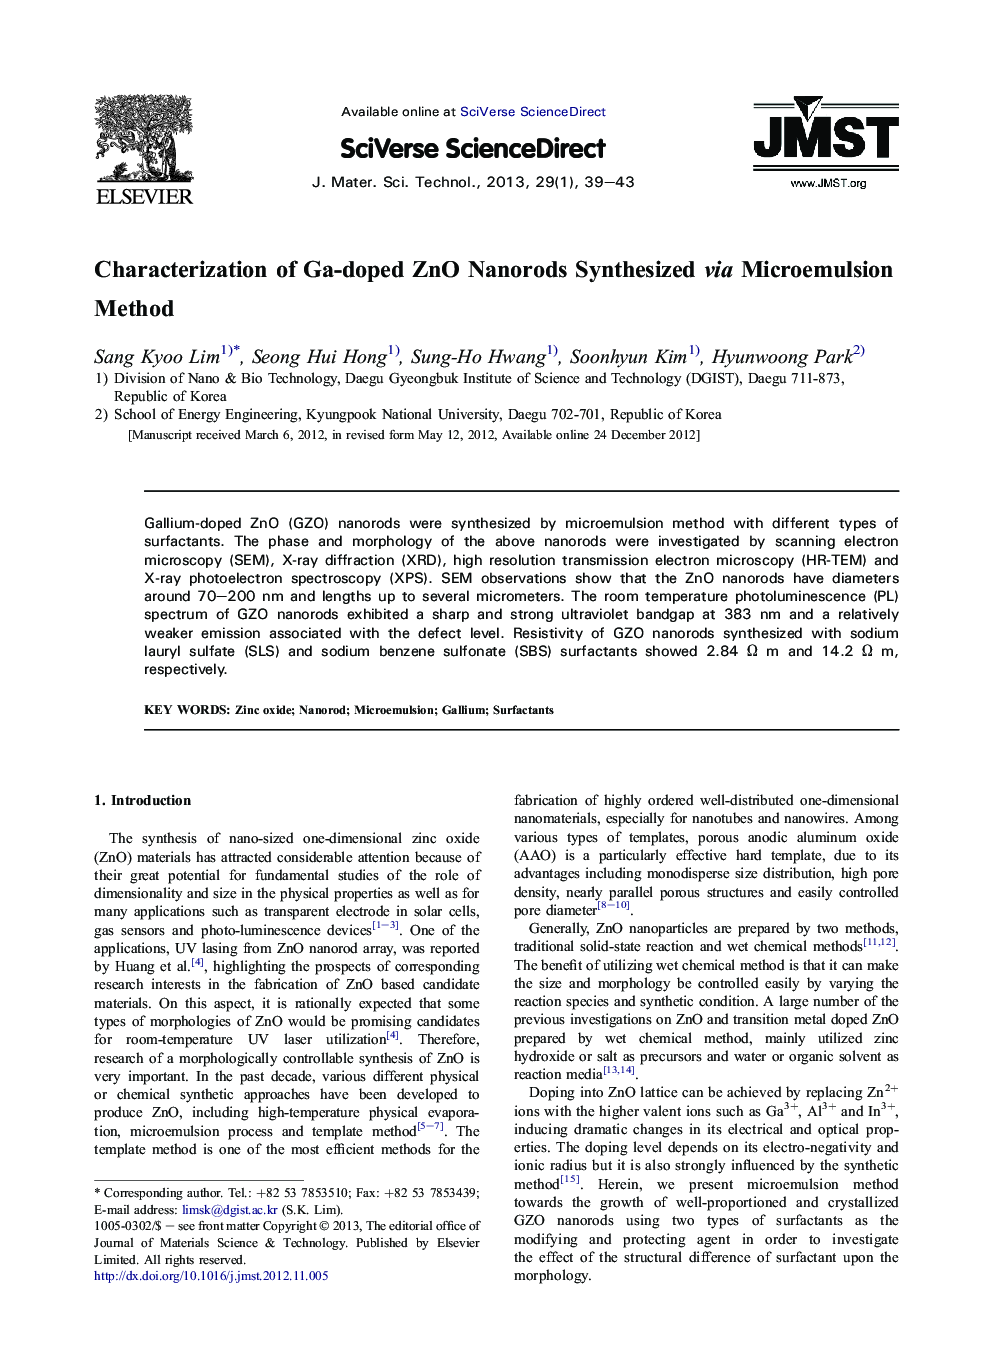 Characterization of Ga-doped ZnO Nanorods Synthesized via Microemulsion Method